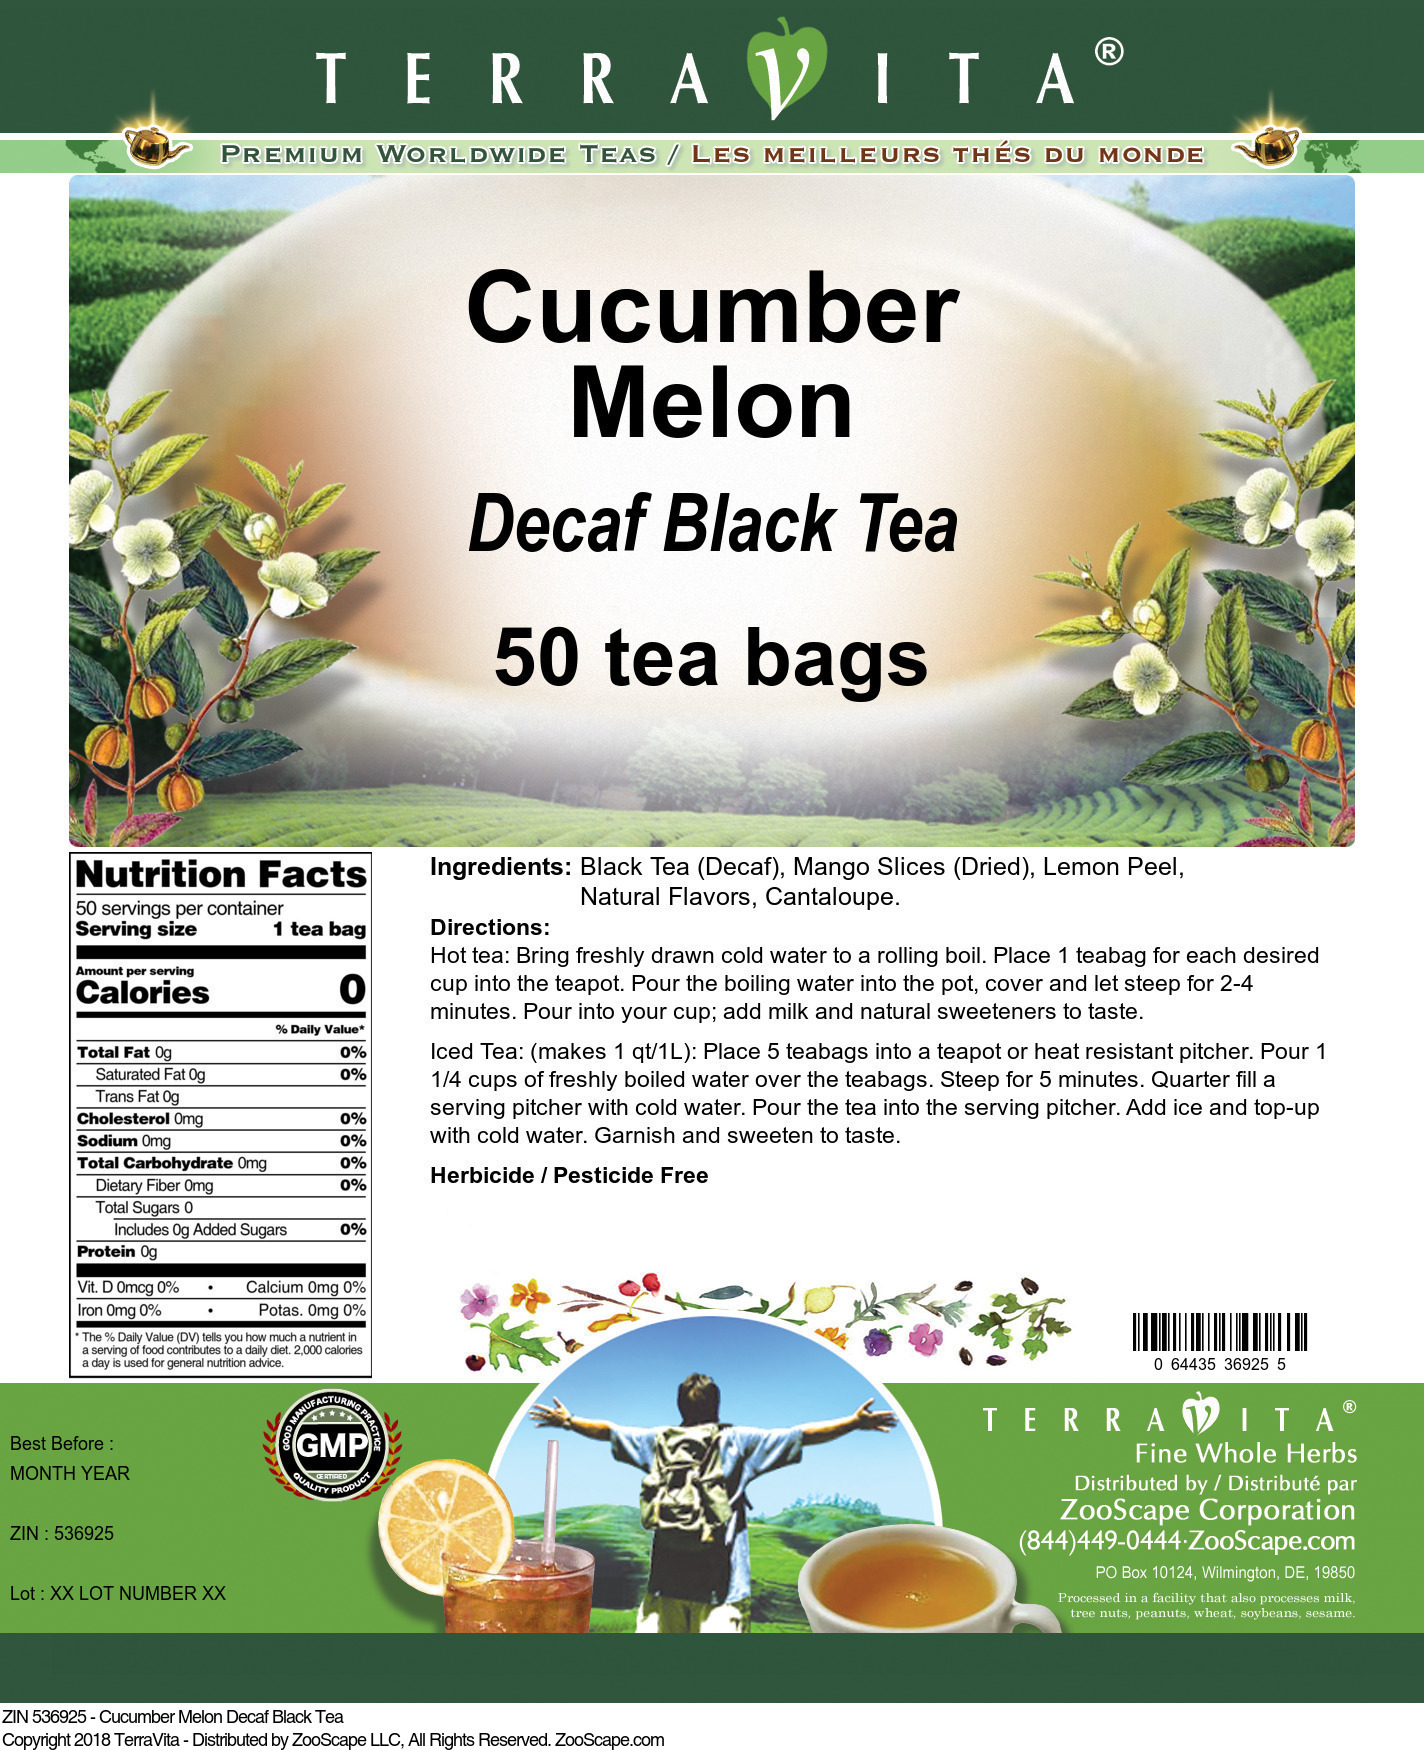 Cucumber Melon Decaf Black Tea - Label